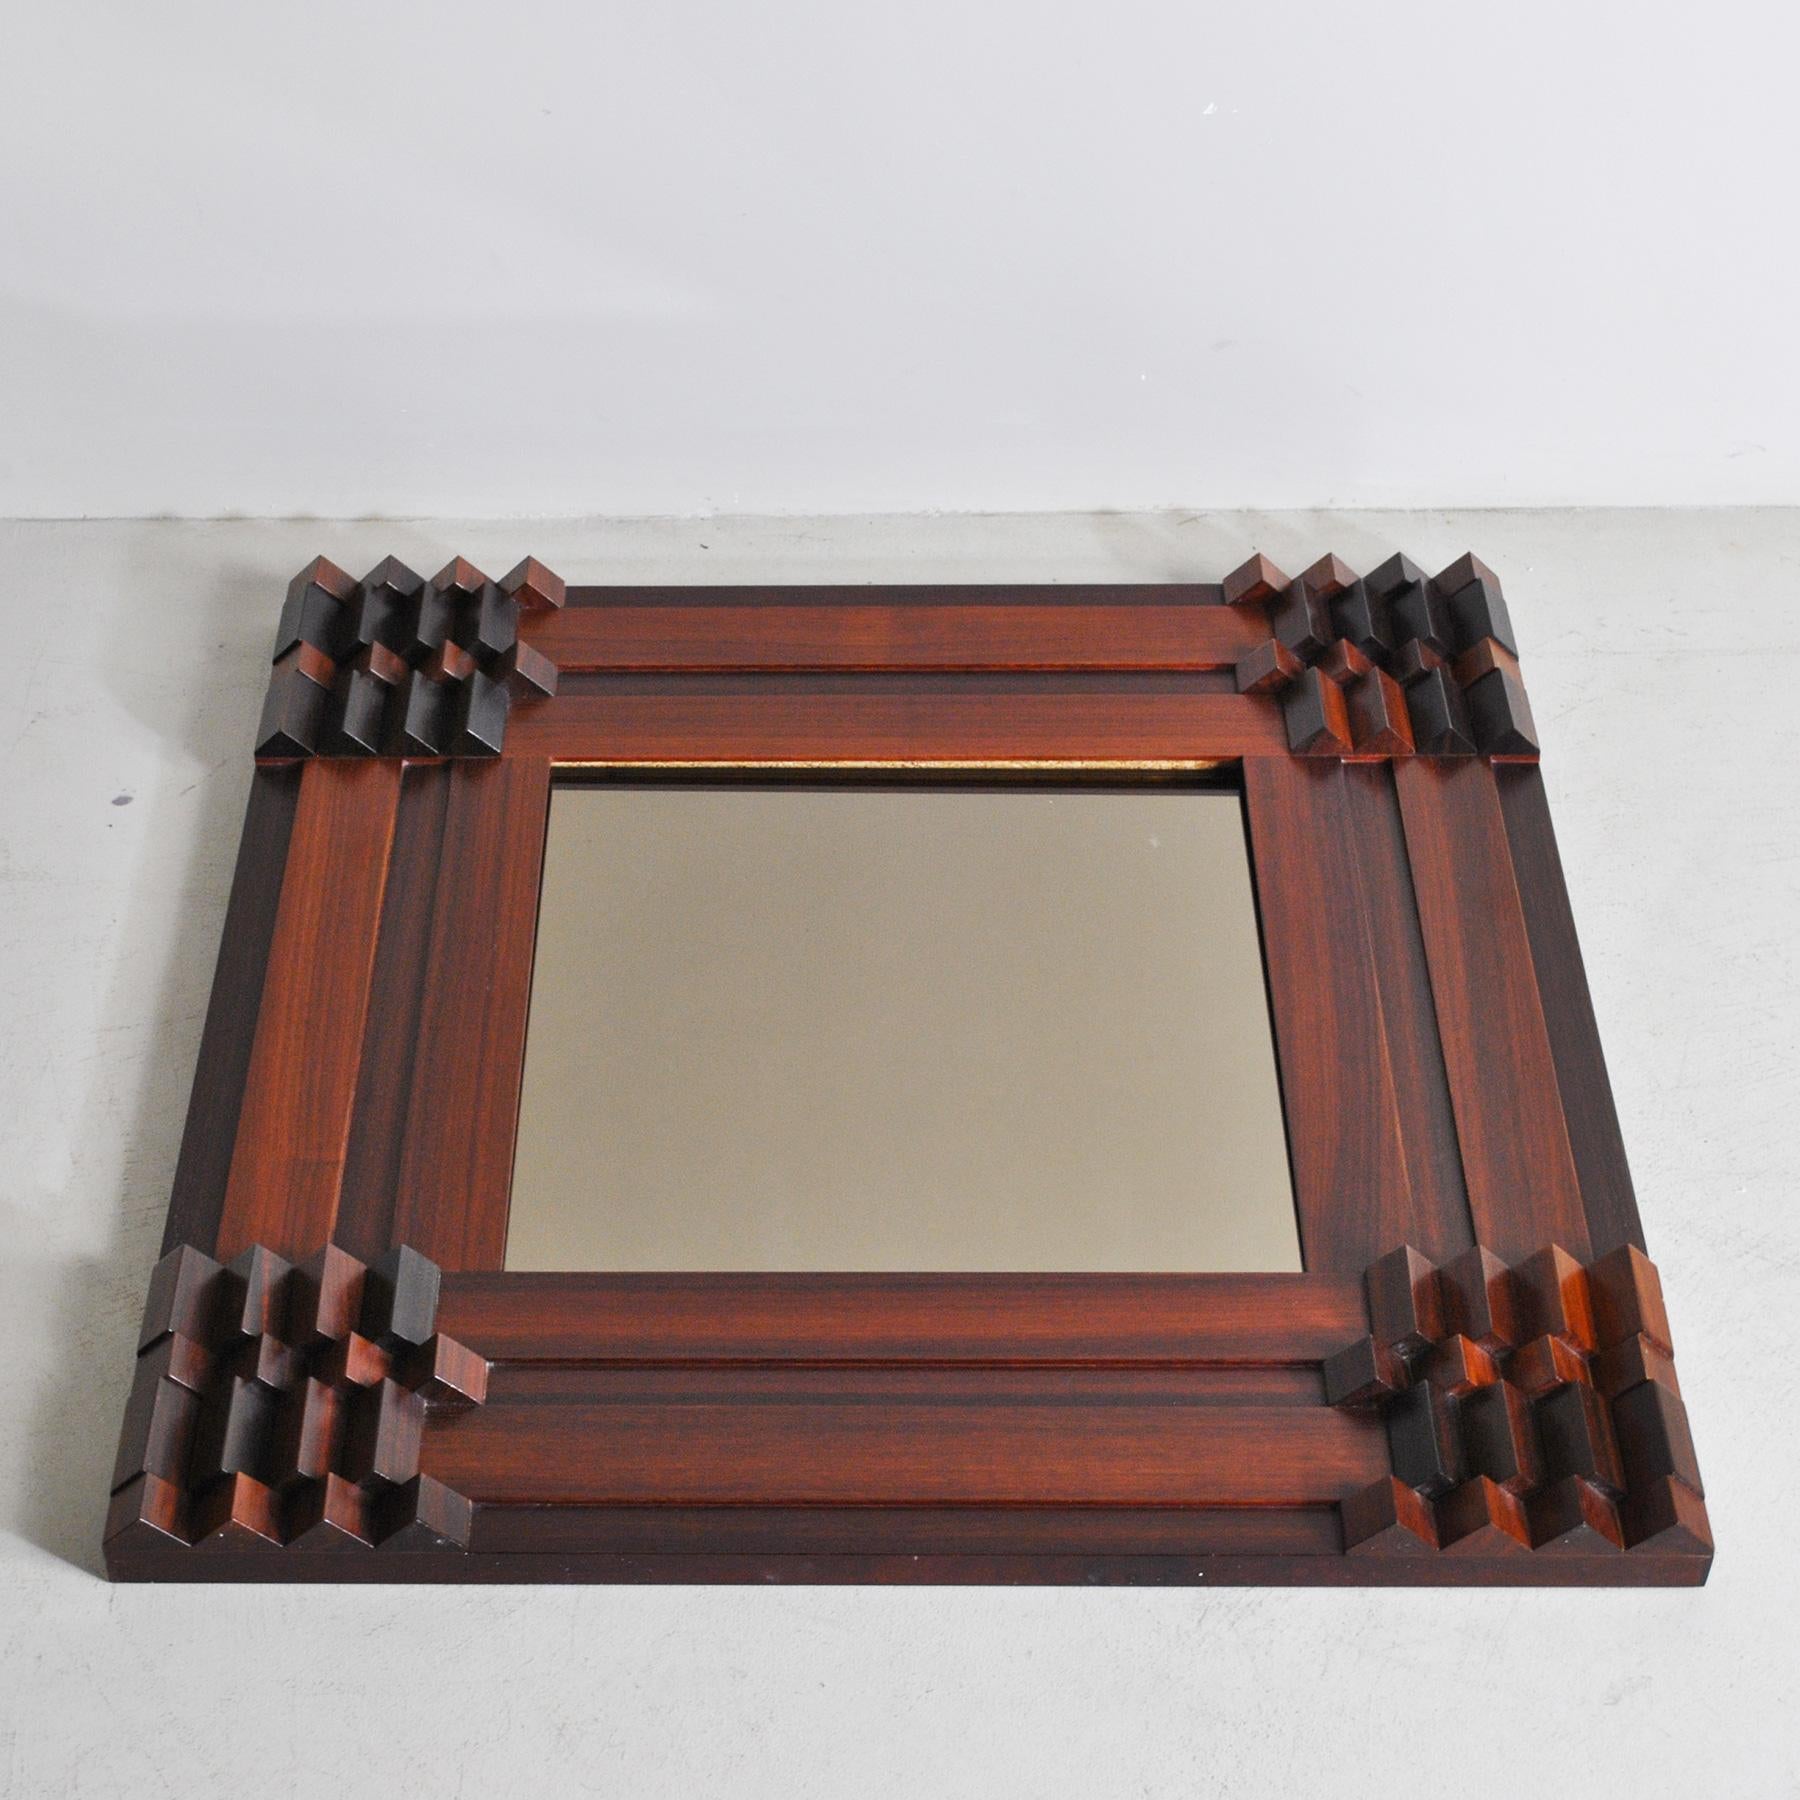 Mirror with square wooden frame, designer Luciano Frigerio, produced by Frigerio Di Desio, 1970s.